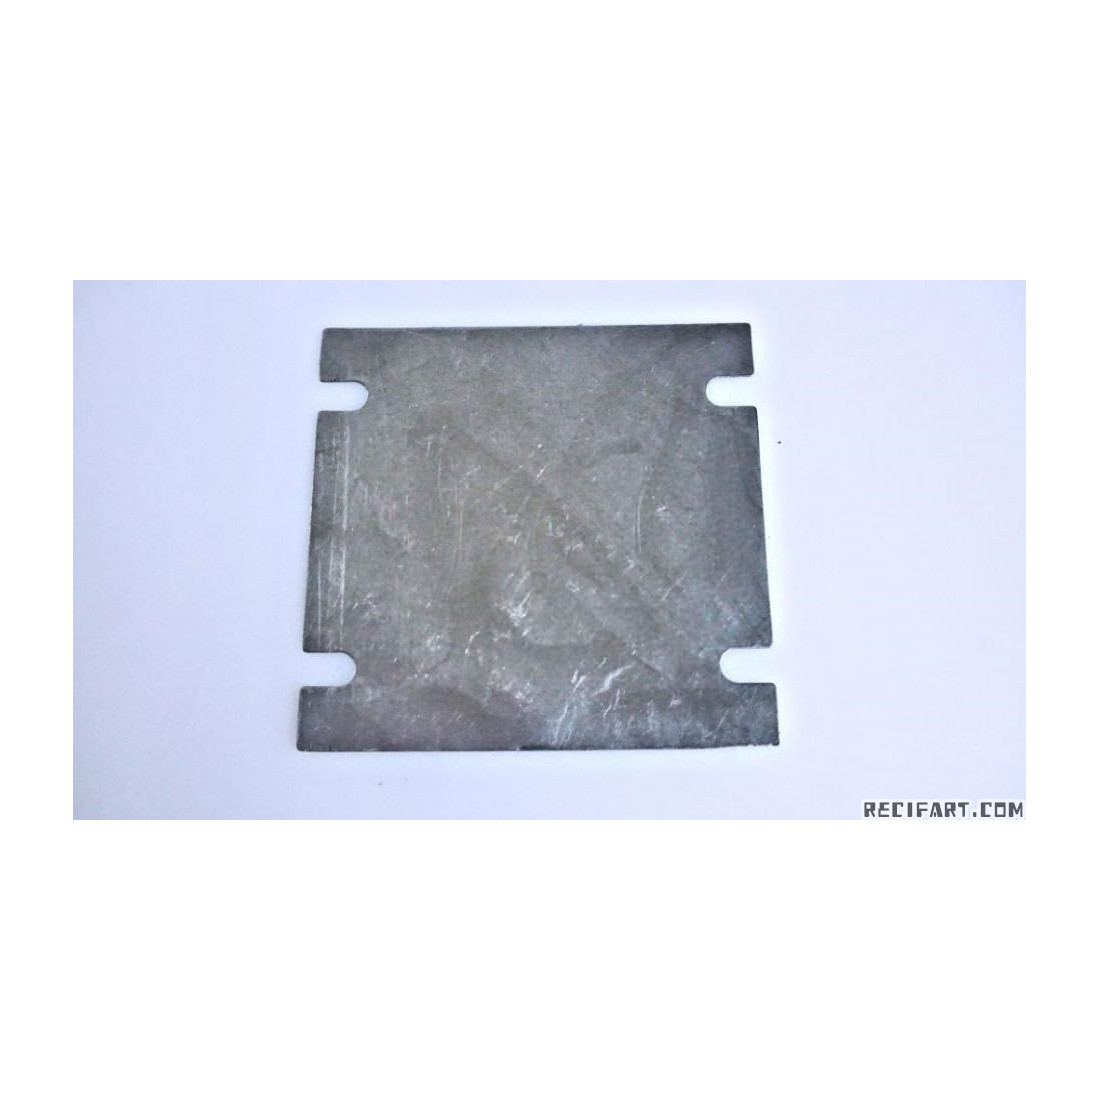 Thermal pad for LED pad